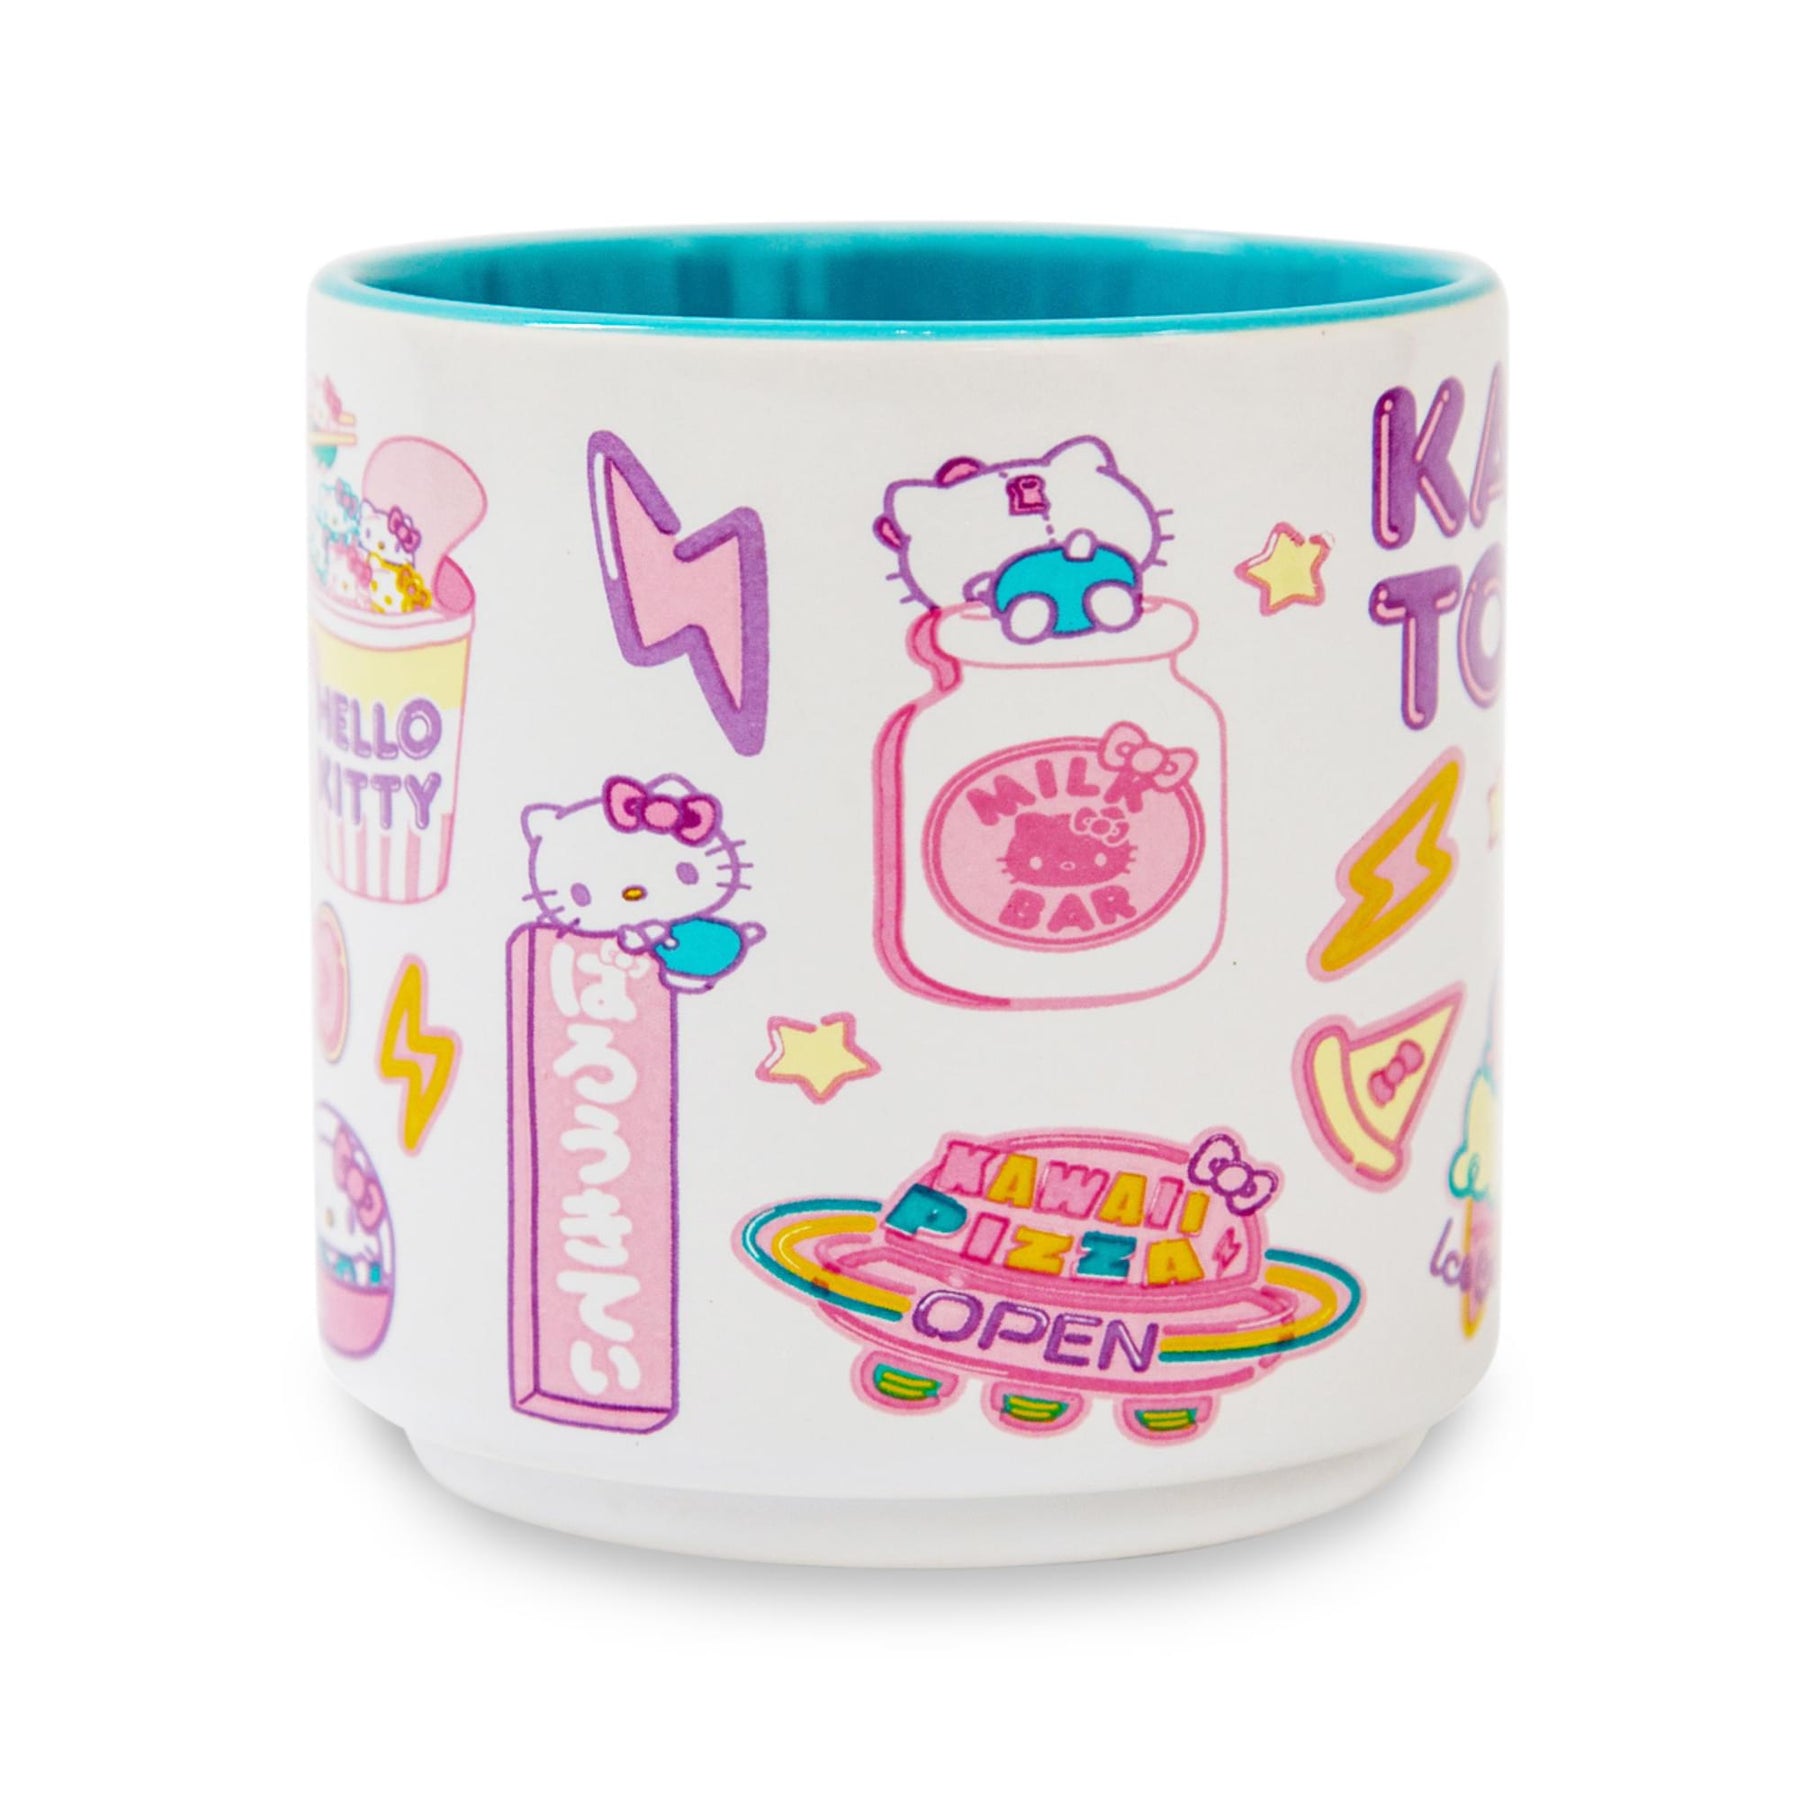 Hello Kitty "Kawaii Tokyo" Allover Icons Ceramic Stacking Mug | Holds 13 Ounces